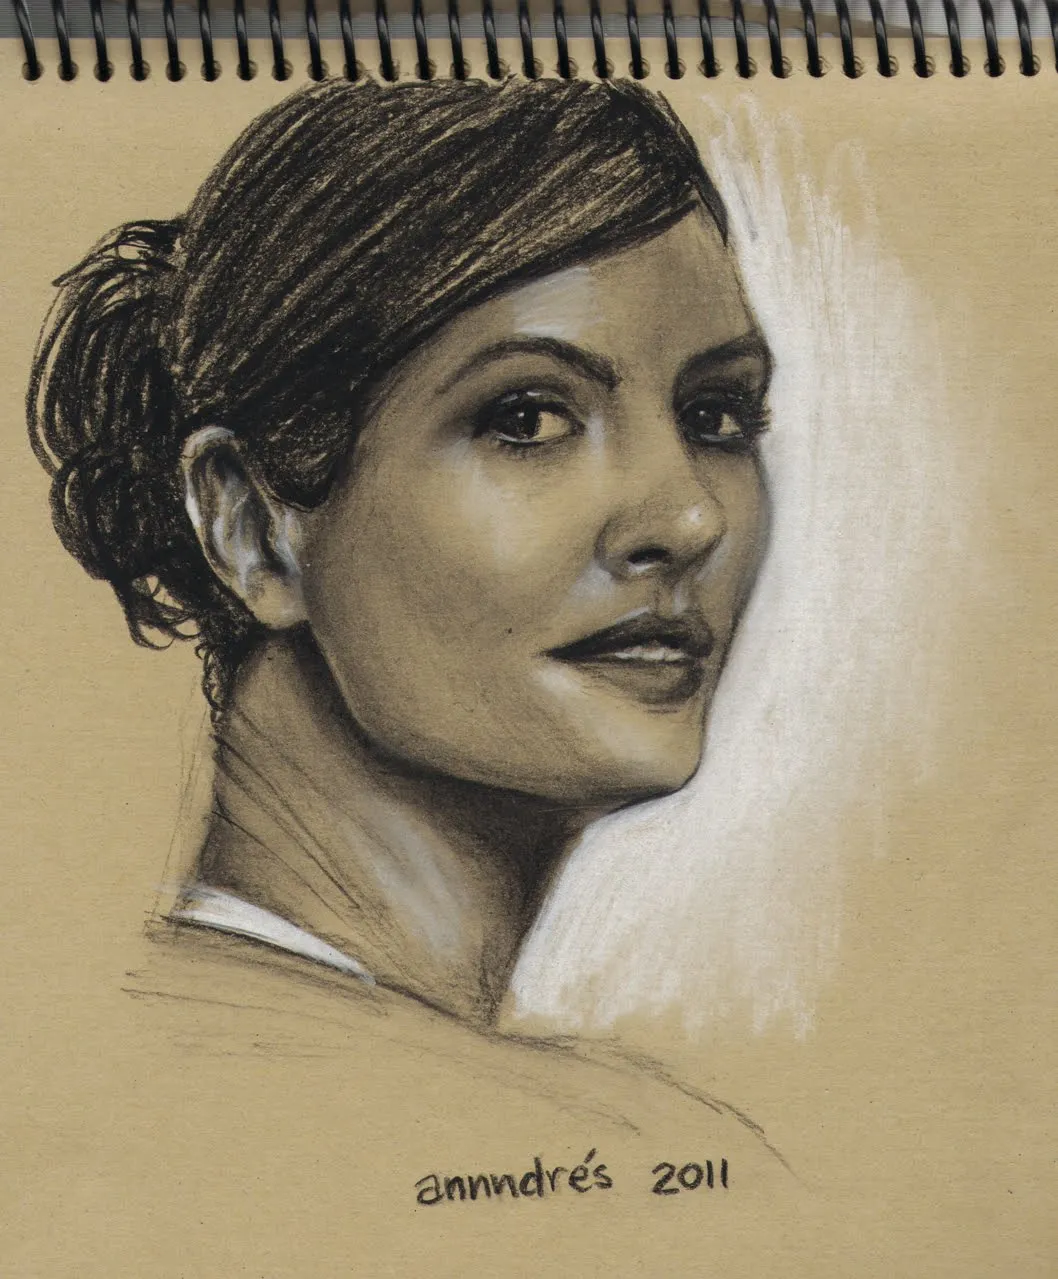 ånnndres: Dibujo de rostro de mujer en lápices conté.